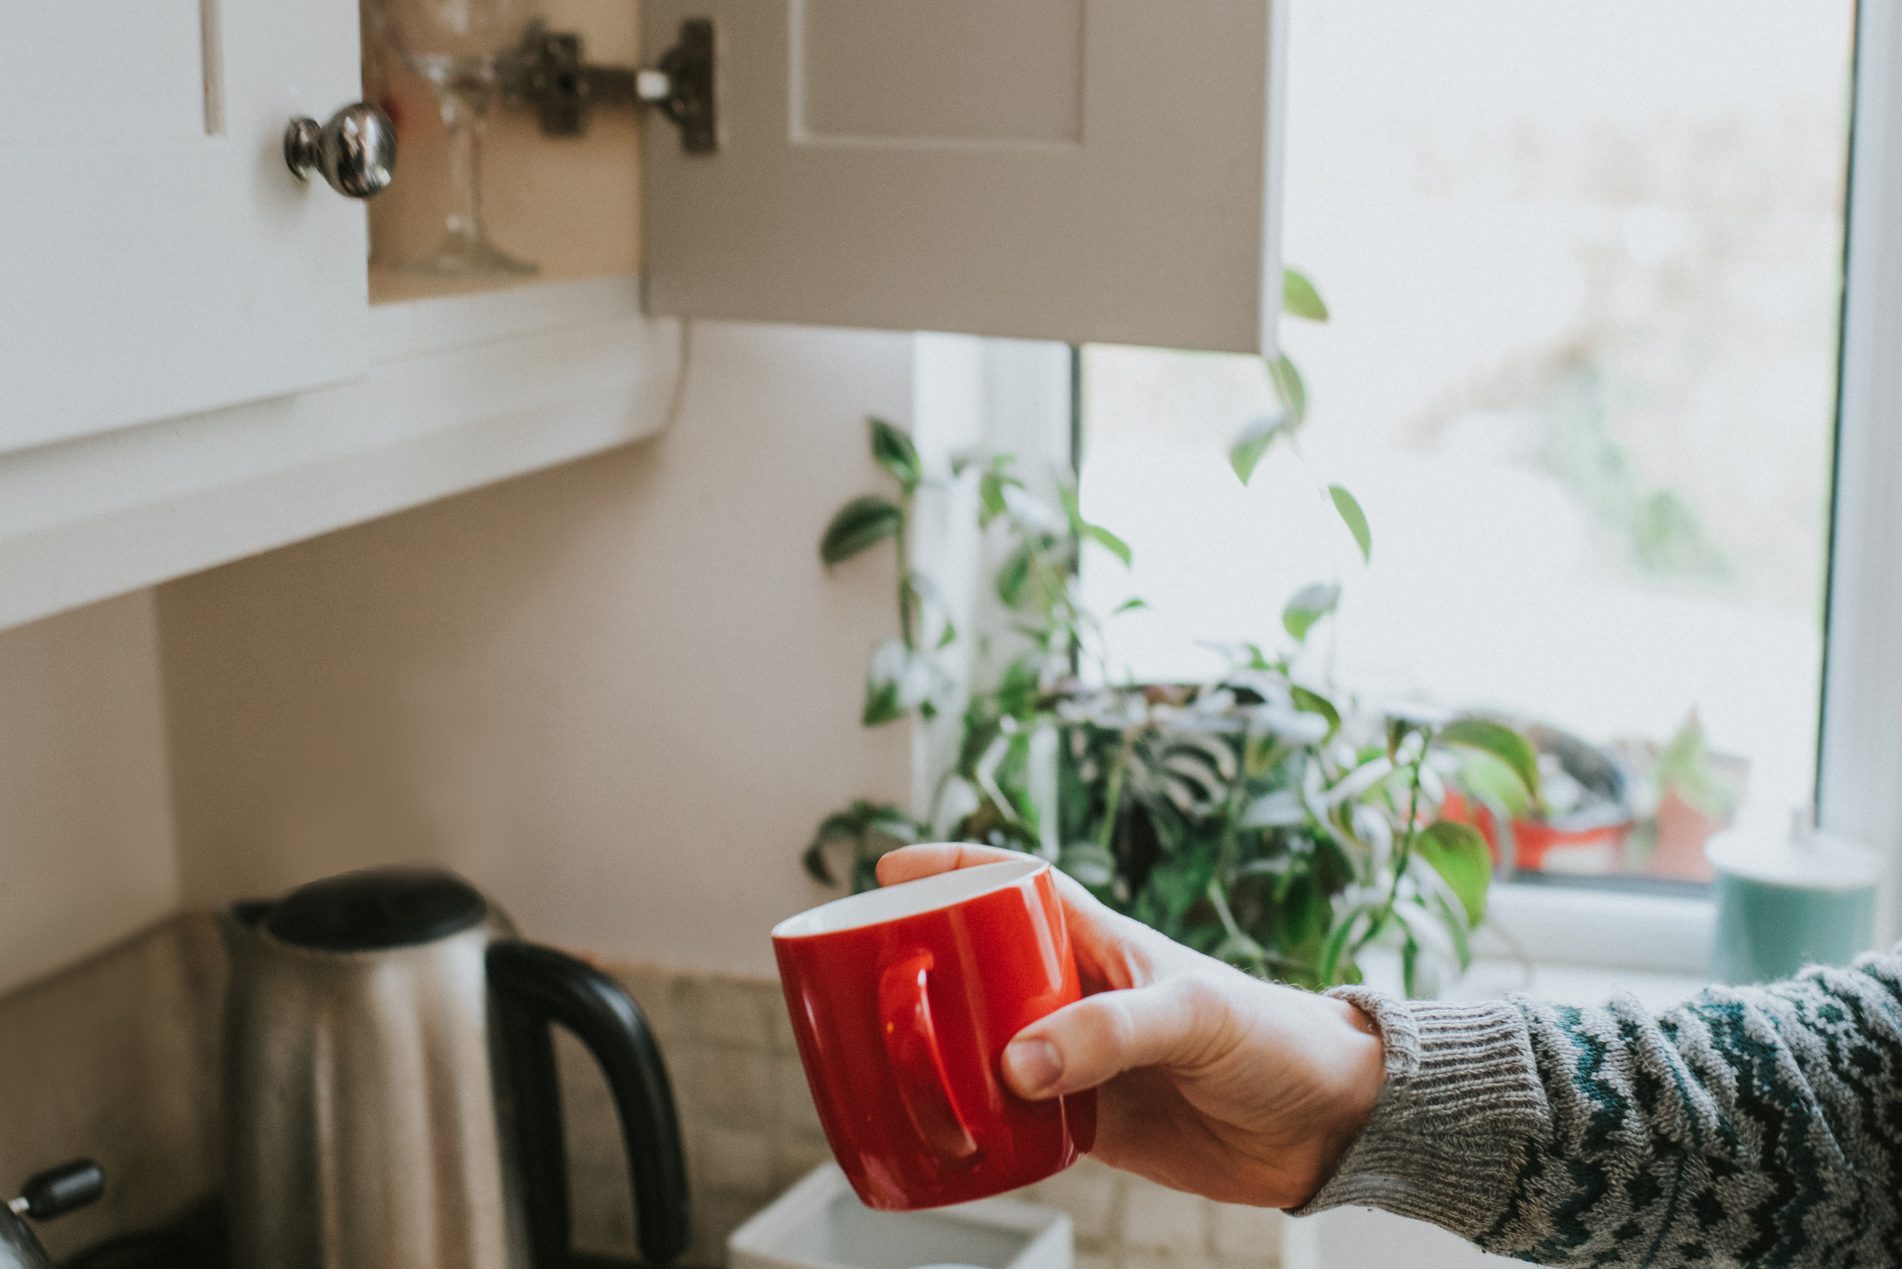 Do You Need to Wash Your Coffee Mug Every Day?